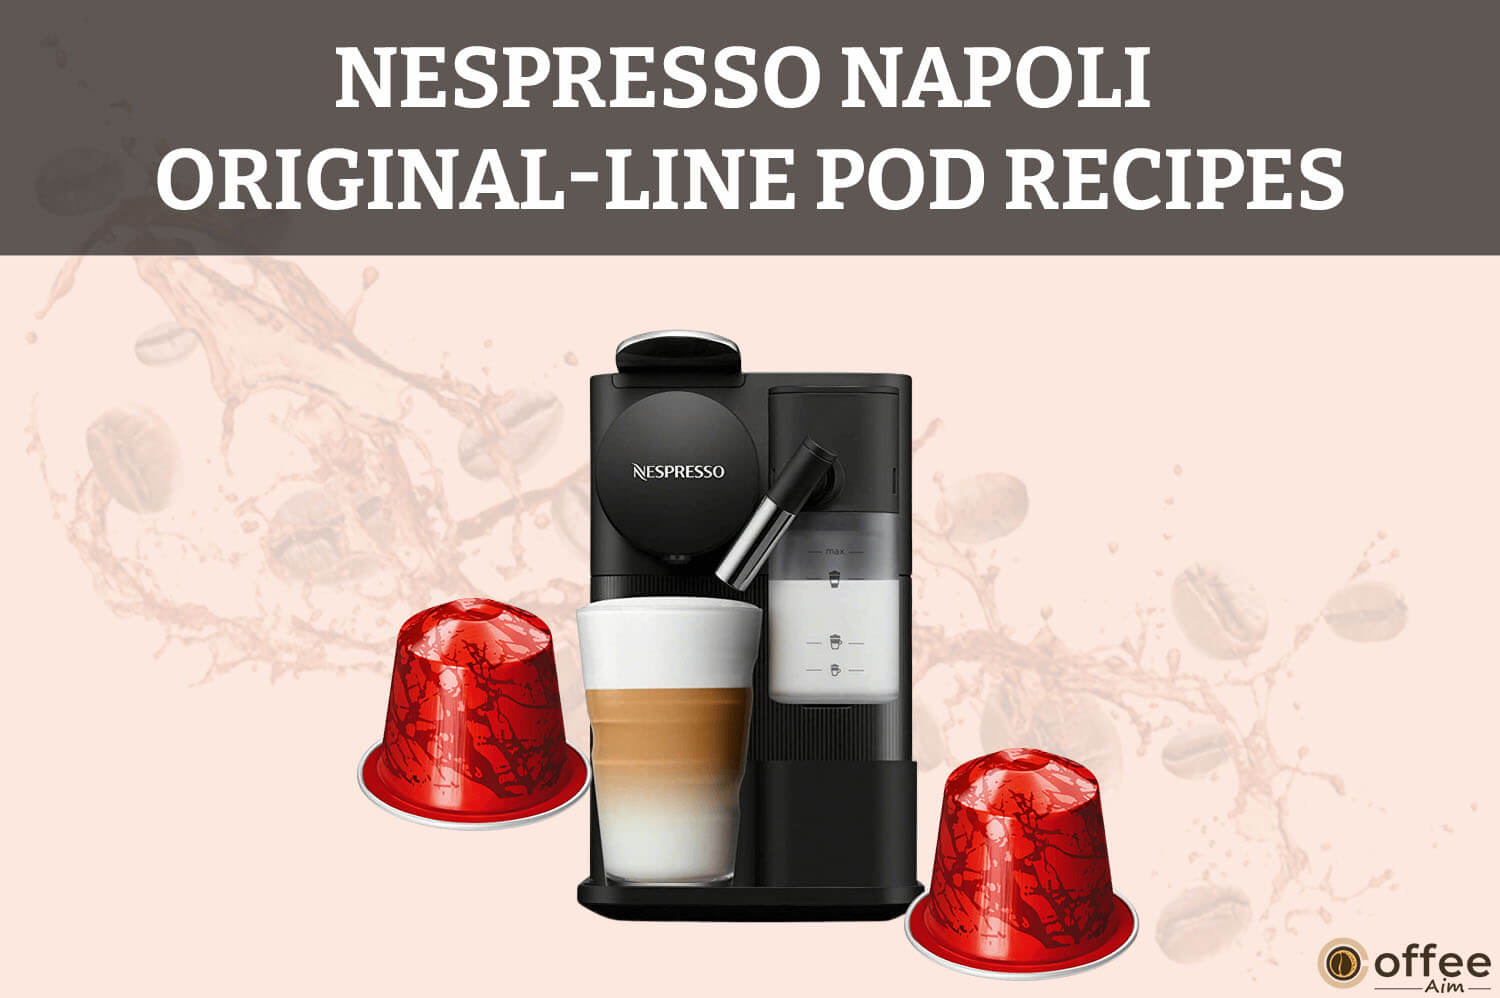 Nespresso-Napoli-Original-Line-Pod-Recipes